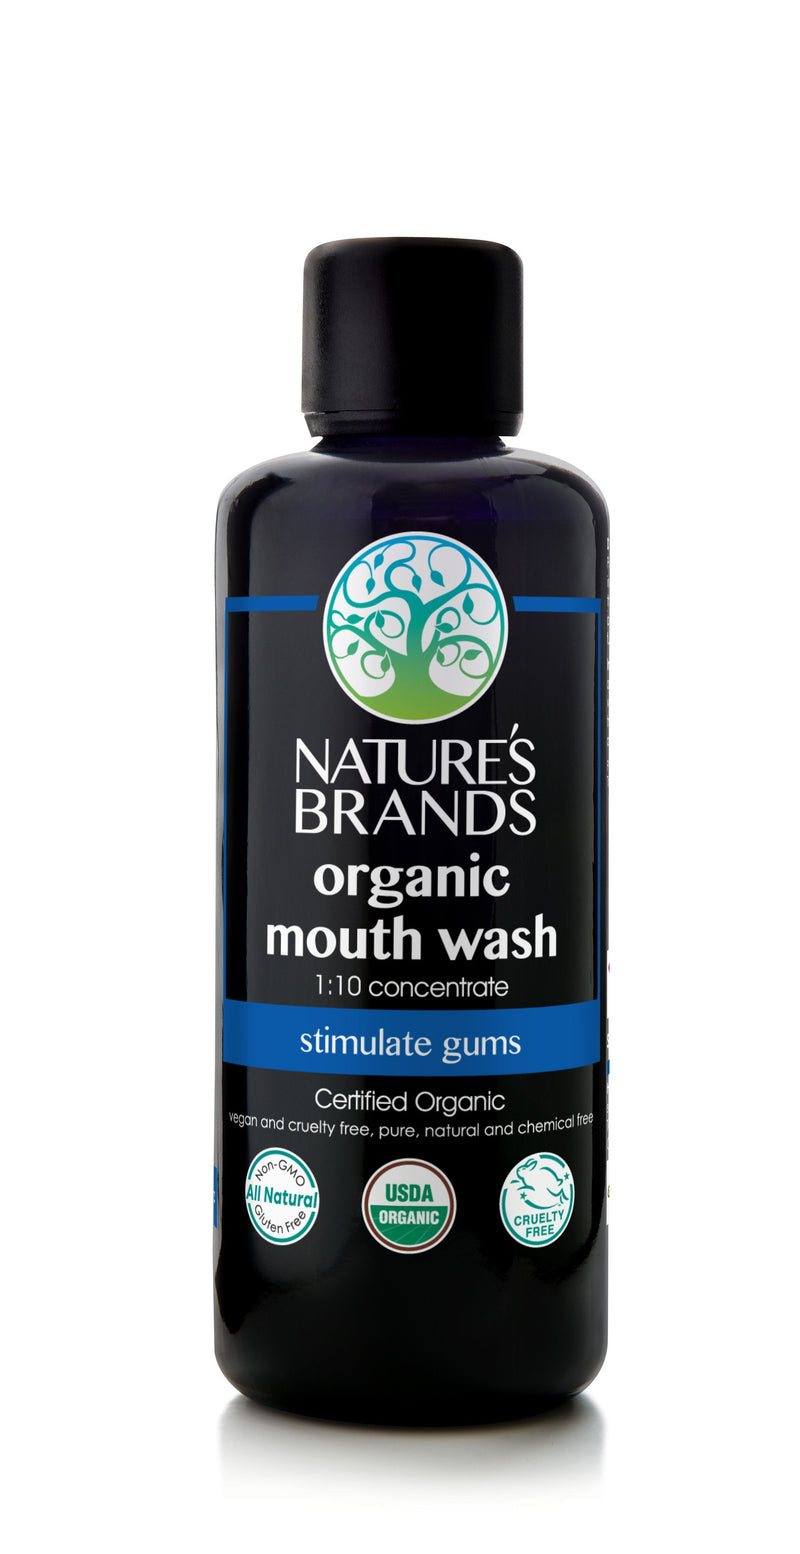 Herbal Choice Mari Organic Mouth Wash, 1:10 Concentrate - Herbal Choice Mari Organic Mouth Wash, 1:10 Concentrate - 3.4floz